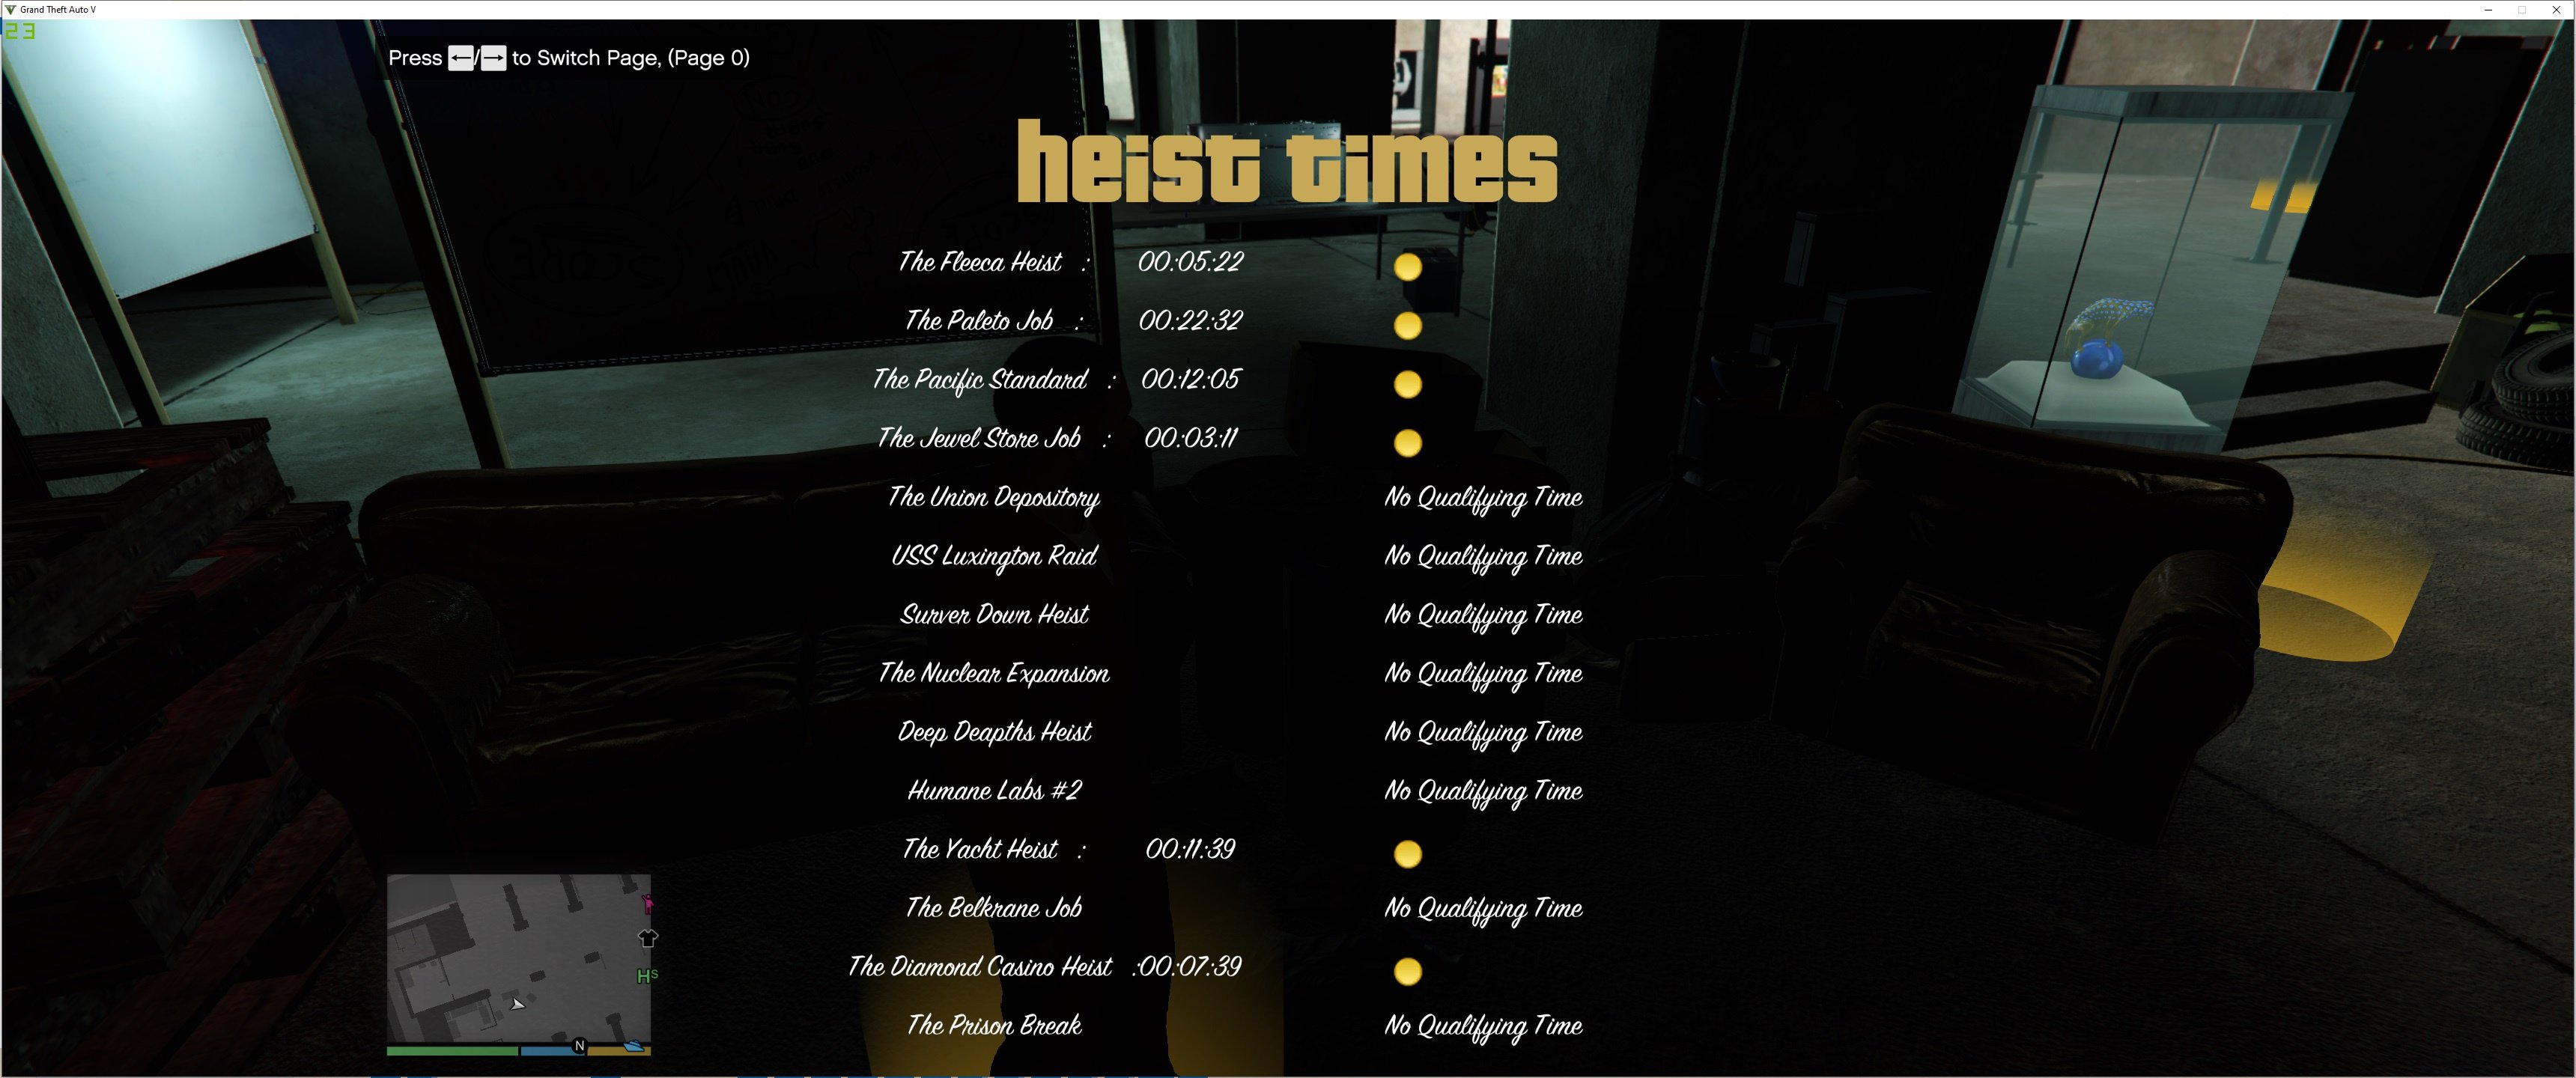 The Payday : A single Player Heist Mod 5.2.6 : Arcade & Cayo Perico Heist – GTA  5 mod